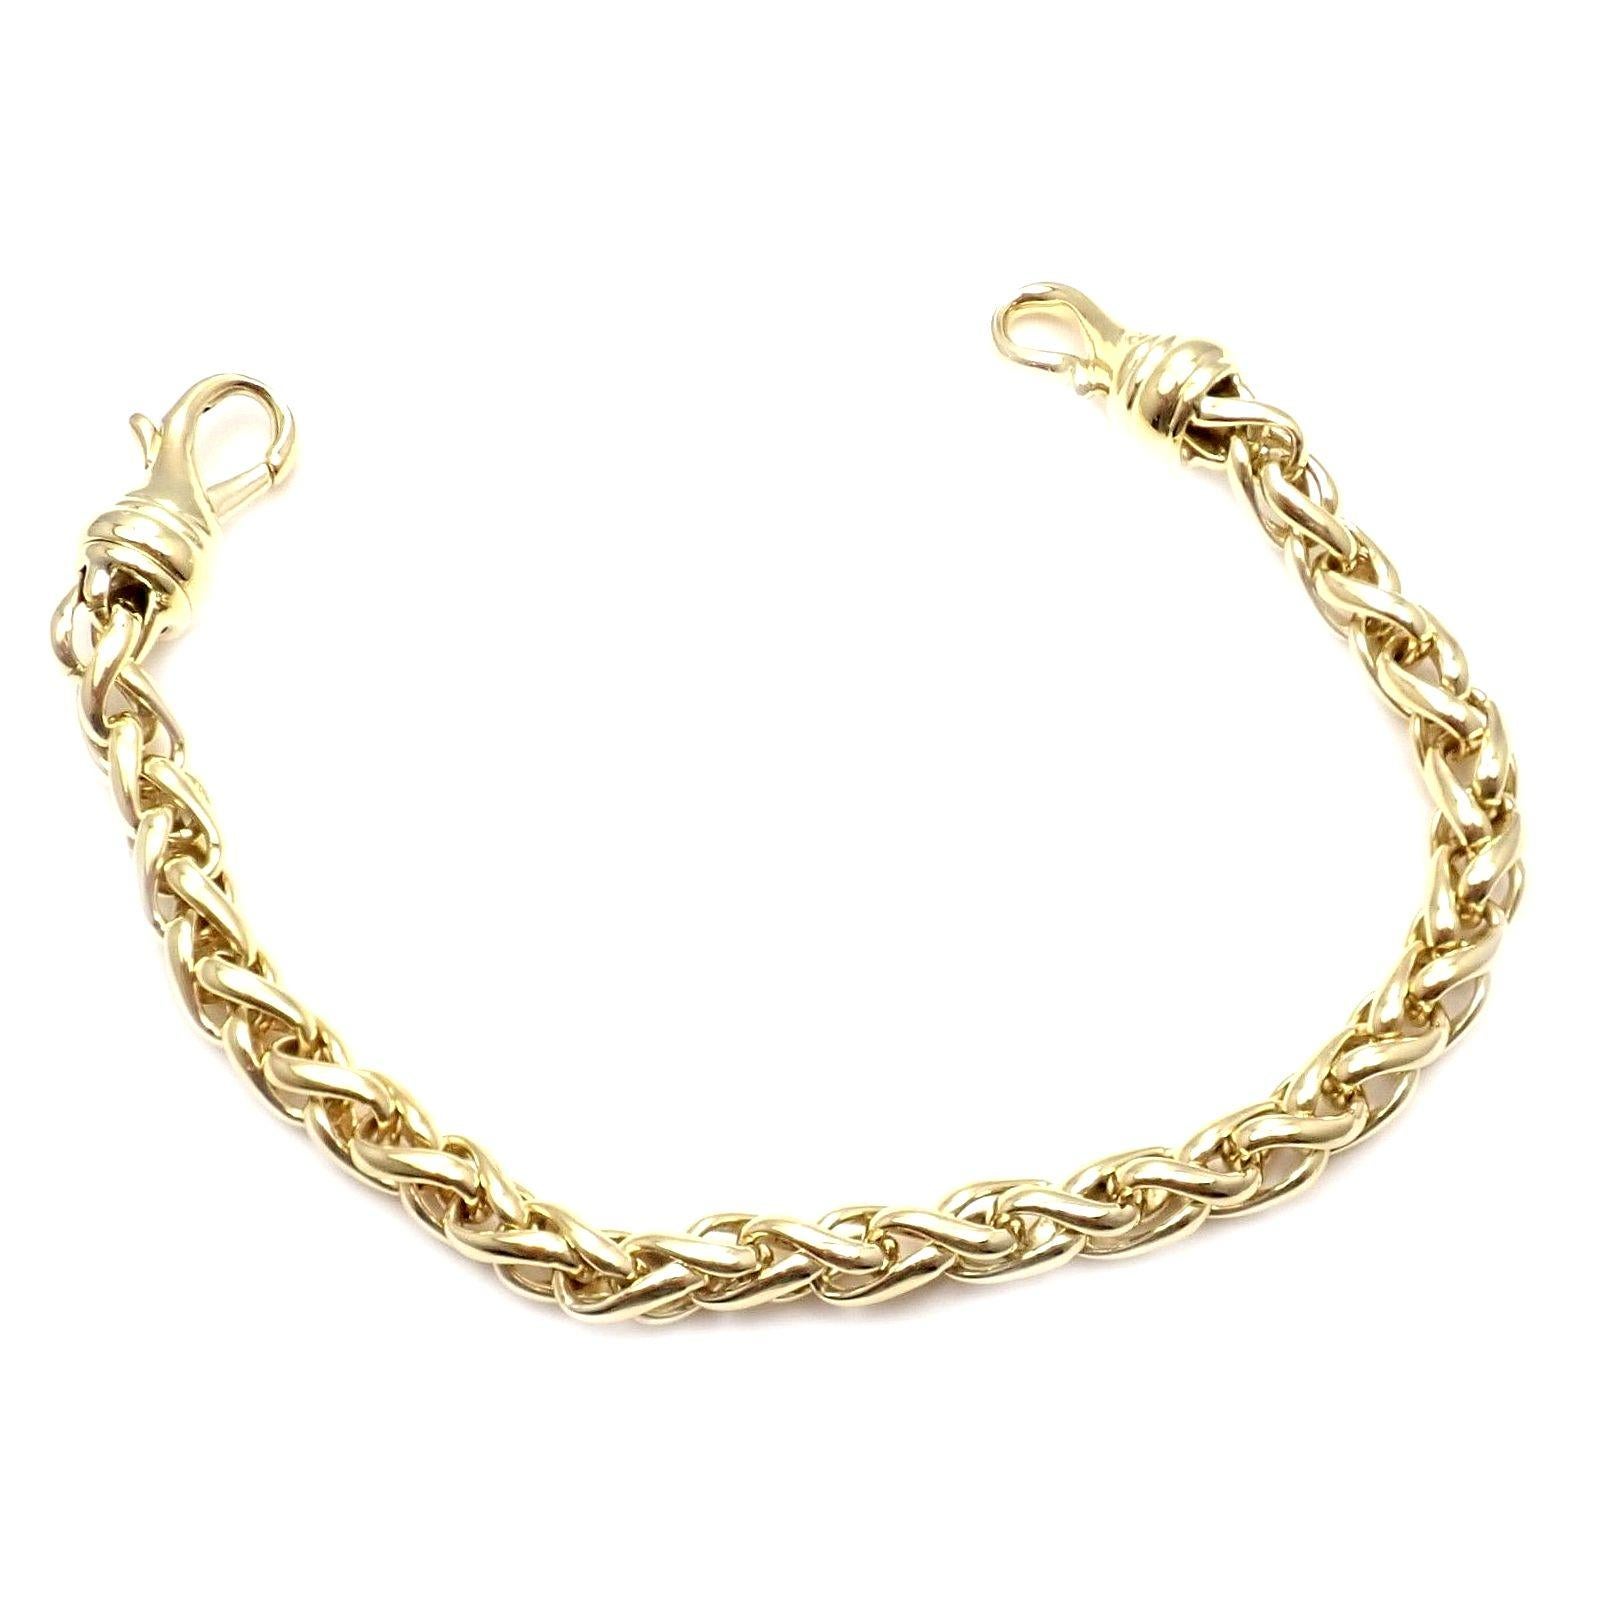 18k Yellow Gold Wheat Link Bracelet by David Yurman.
Details:
Length: 7